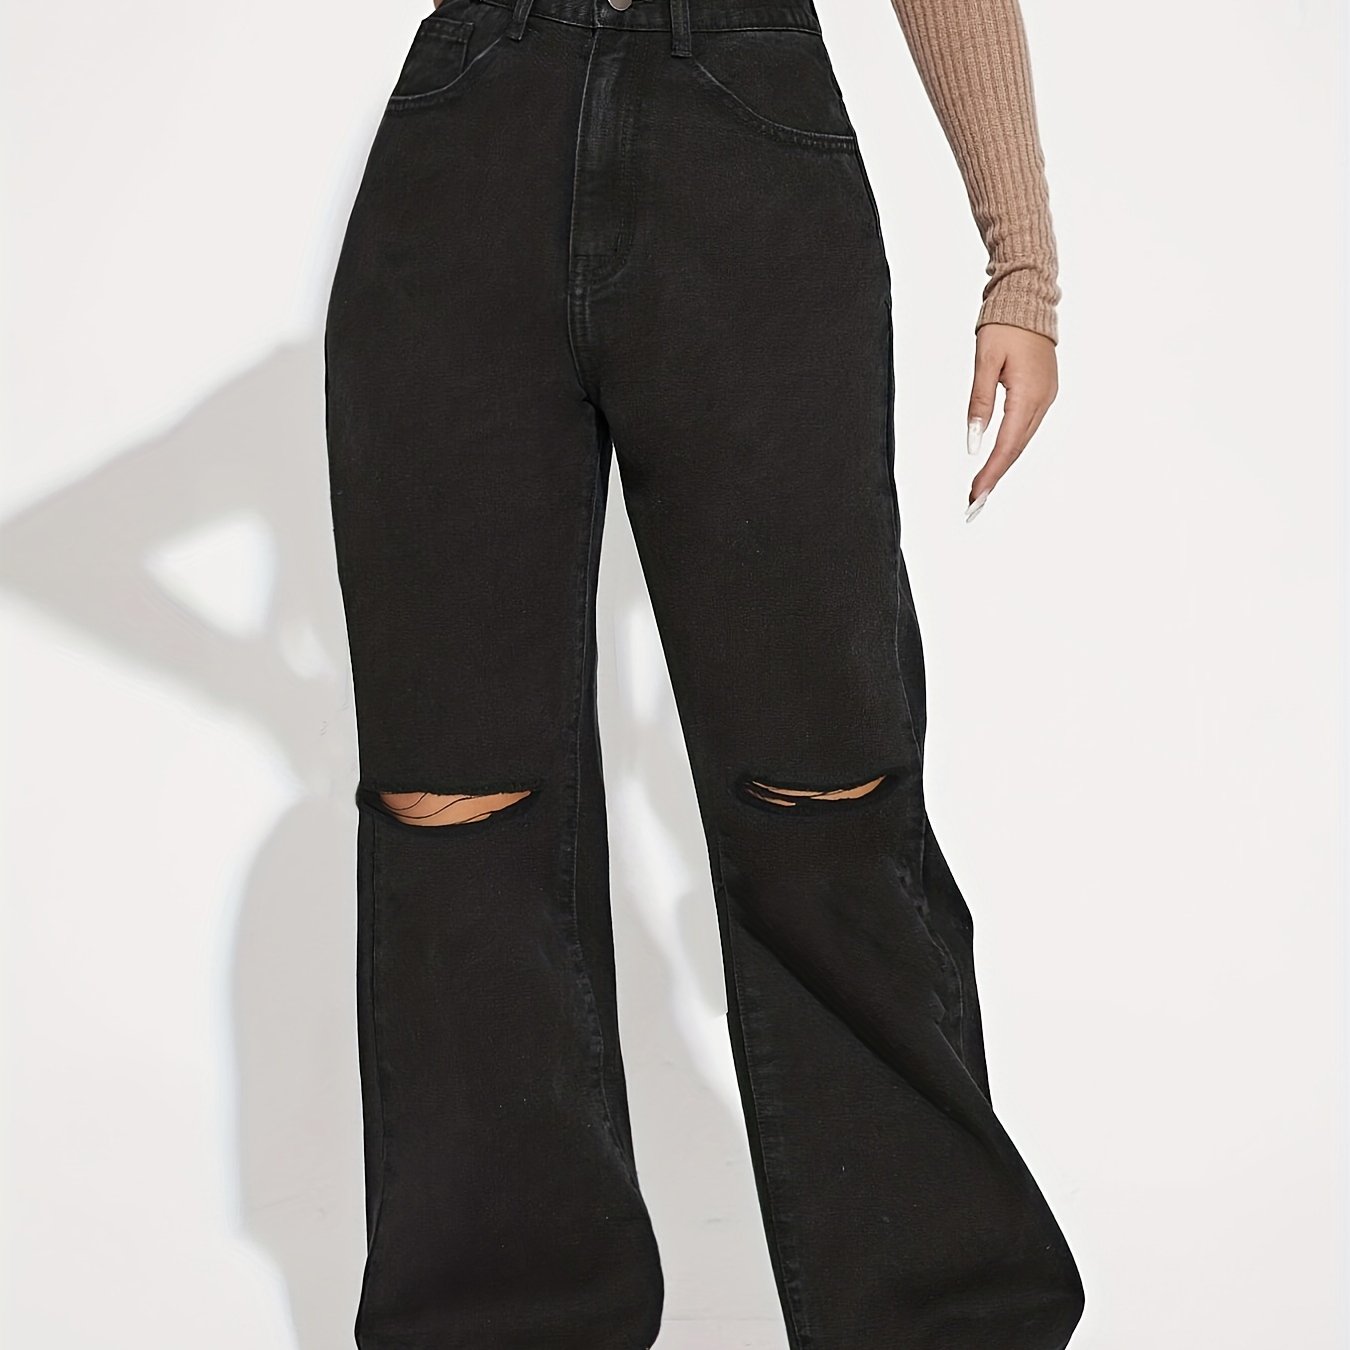 Antmvs Black Ripped Loose Fit Straight Jeans, Wide Leg Slash Pockets High Waist Non-Stretch Denim Pants, Women's Denim Jeans & Clothing